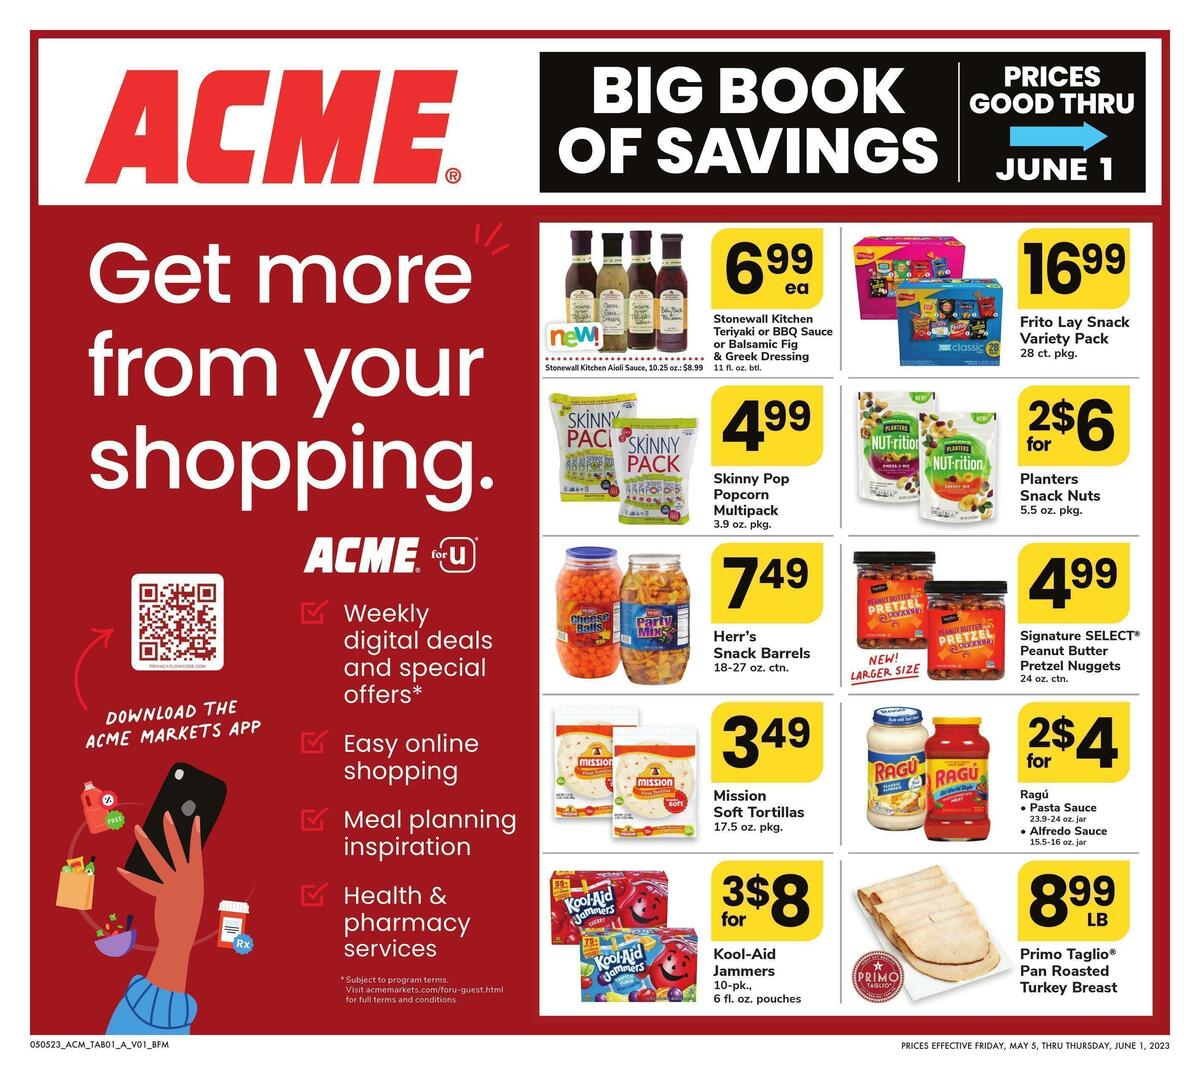 ACME Markets Big Book of Savings Weekly Ad from May 5